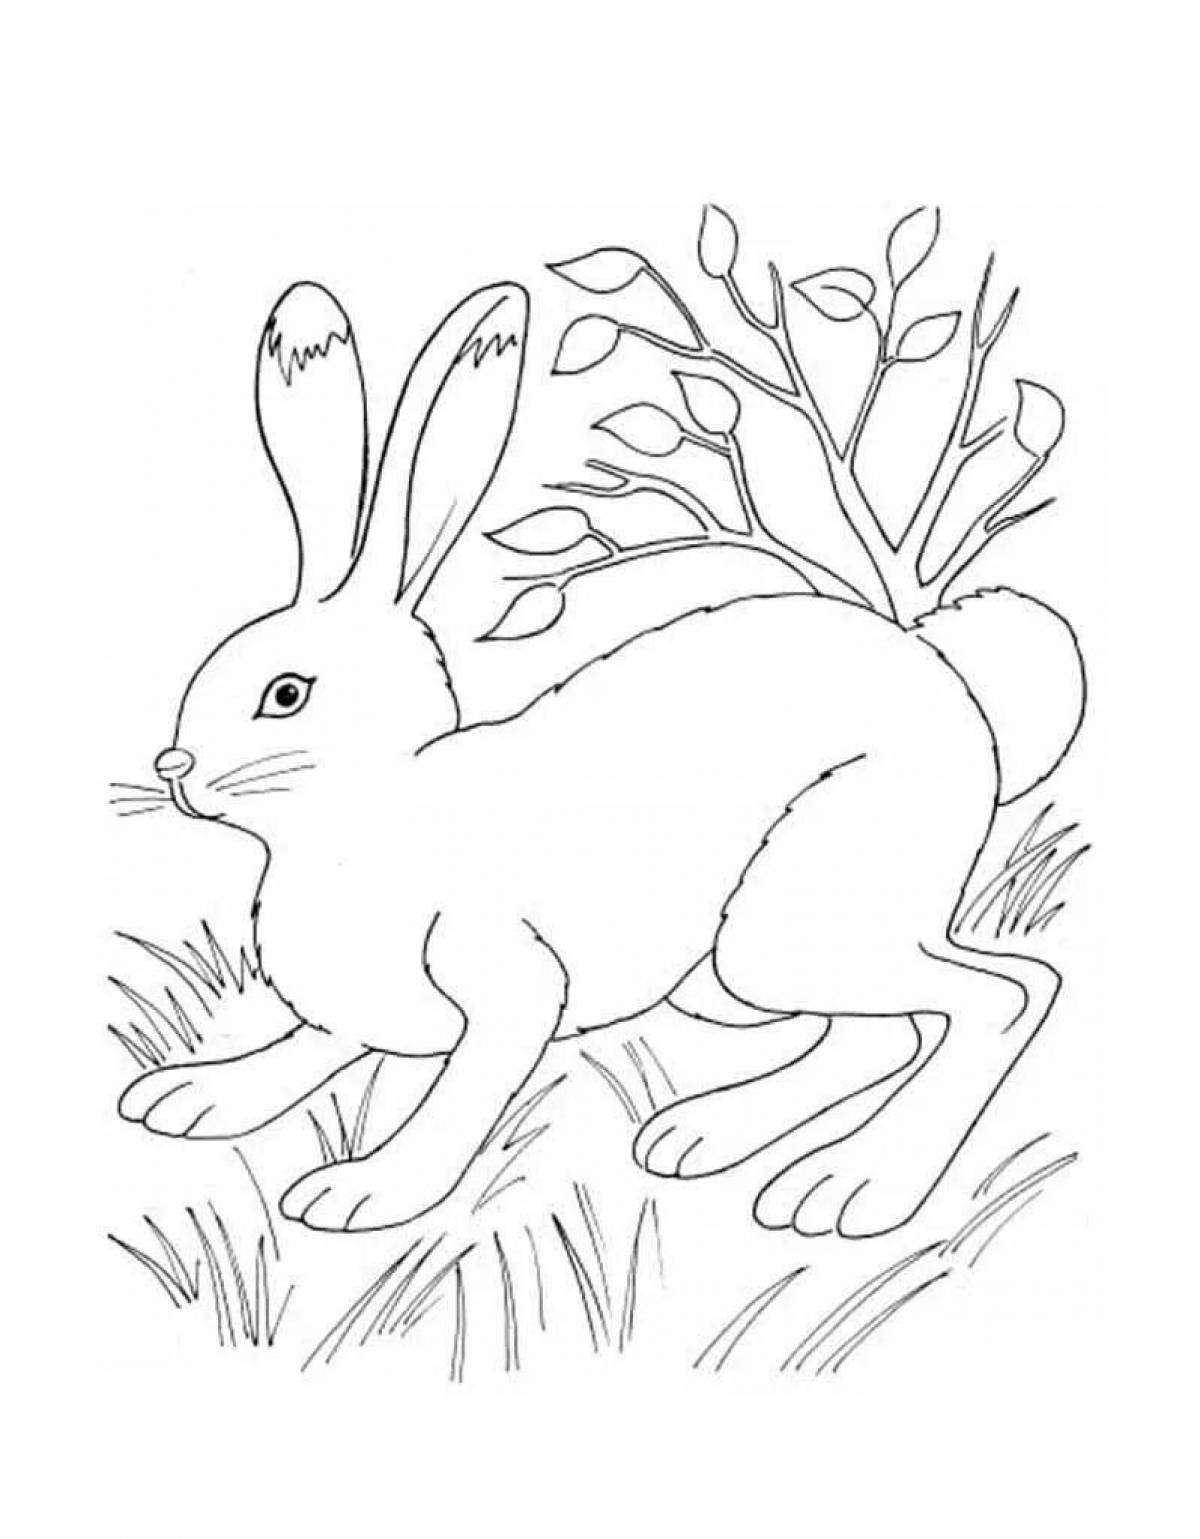 Cute bunny coloring book